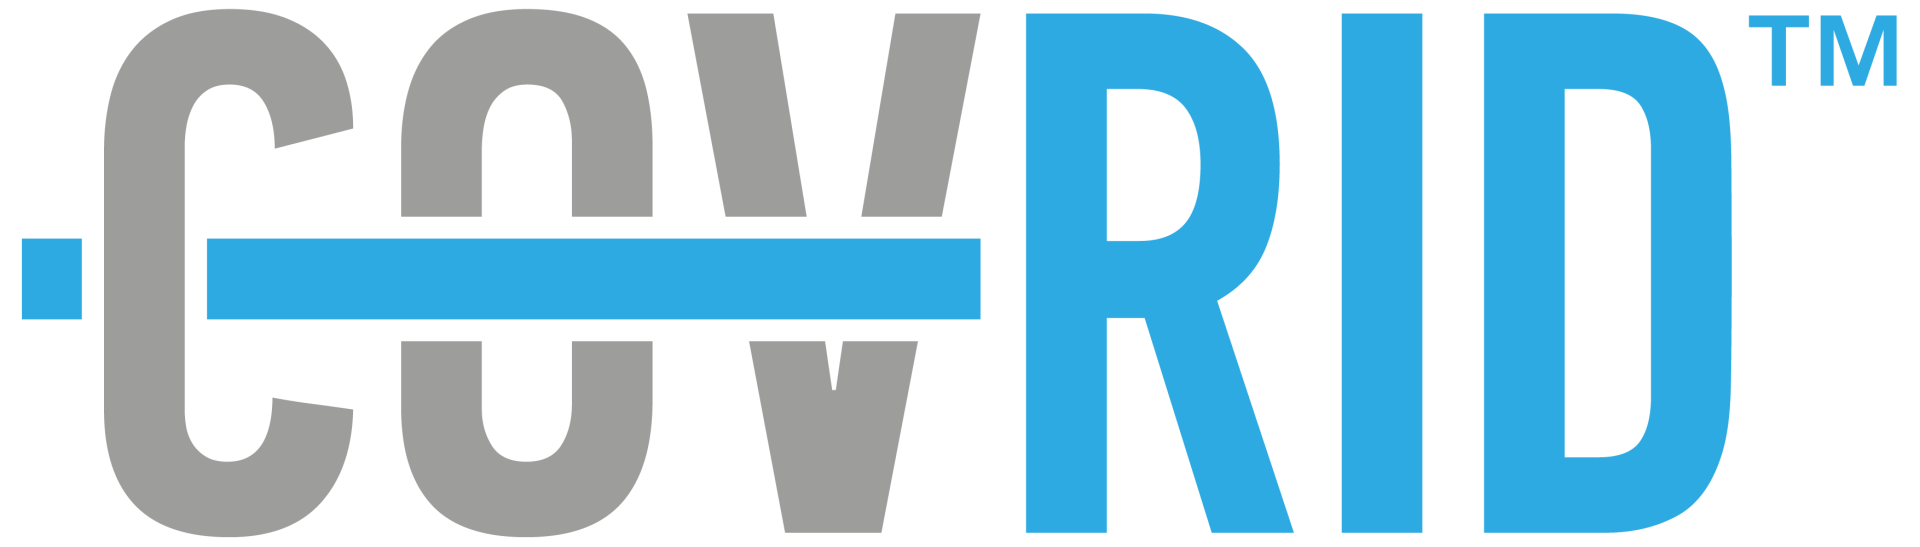 Grey and Blue COV-RID Logo for COV-RID High Level Disinfectant fogging solution